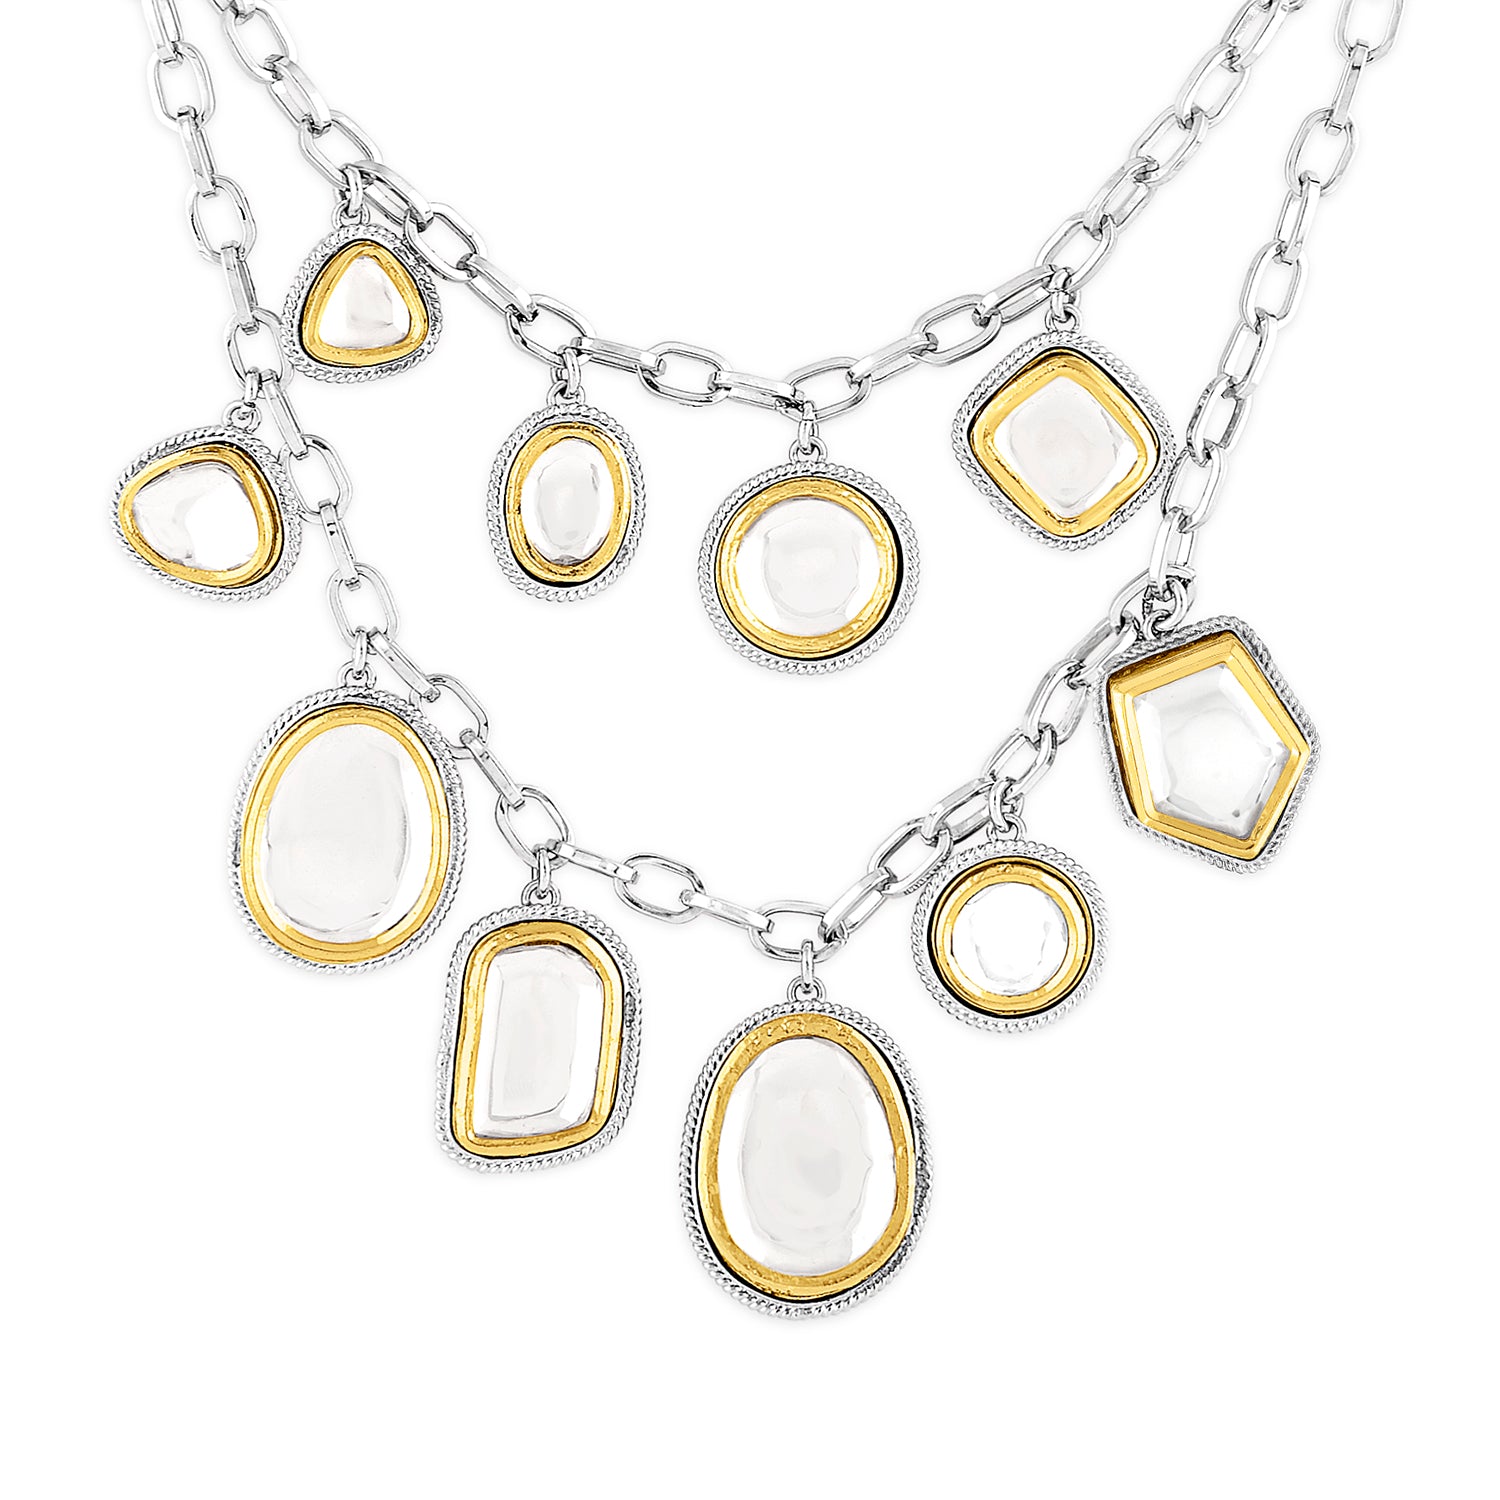 Gold & Silver Polki Charm Necklace